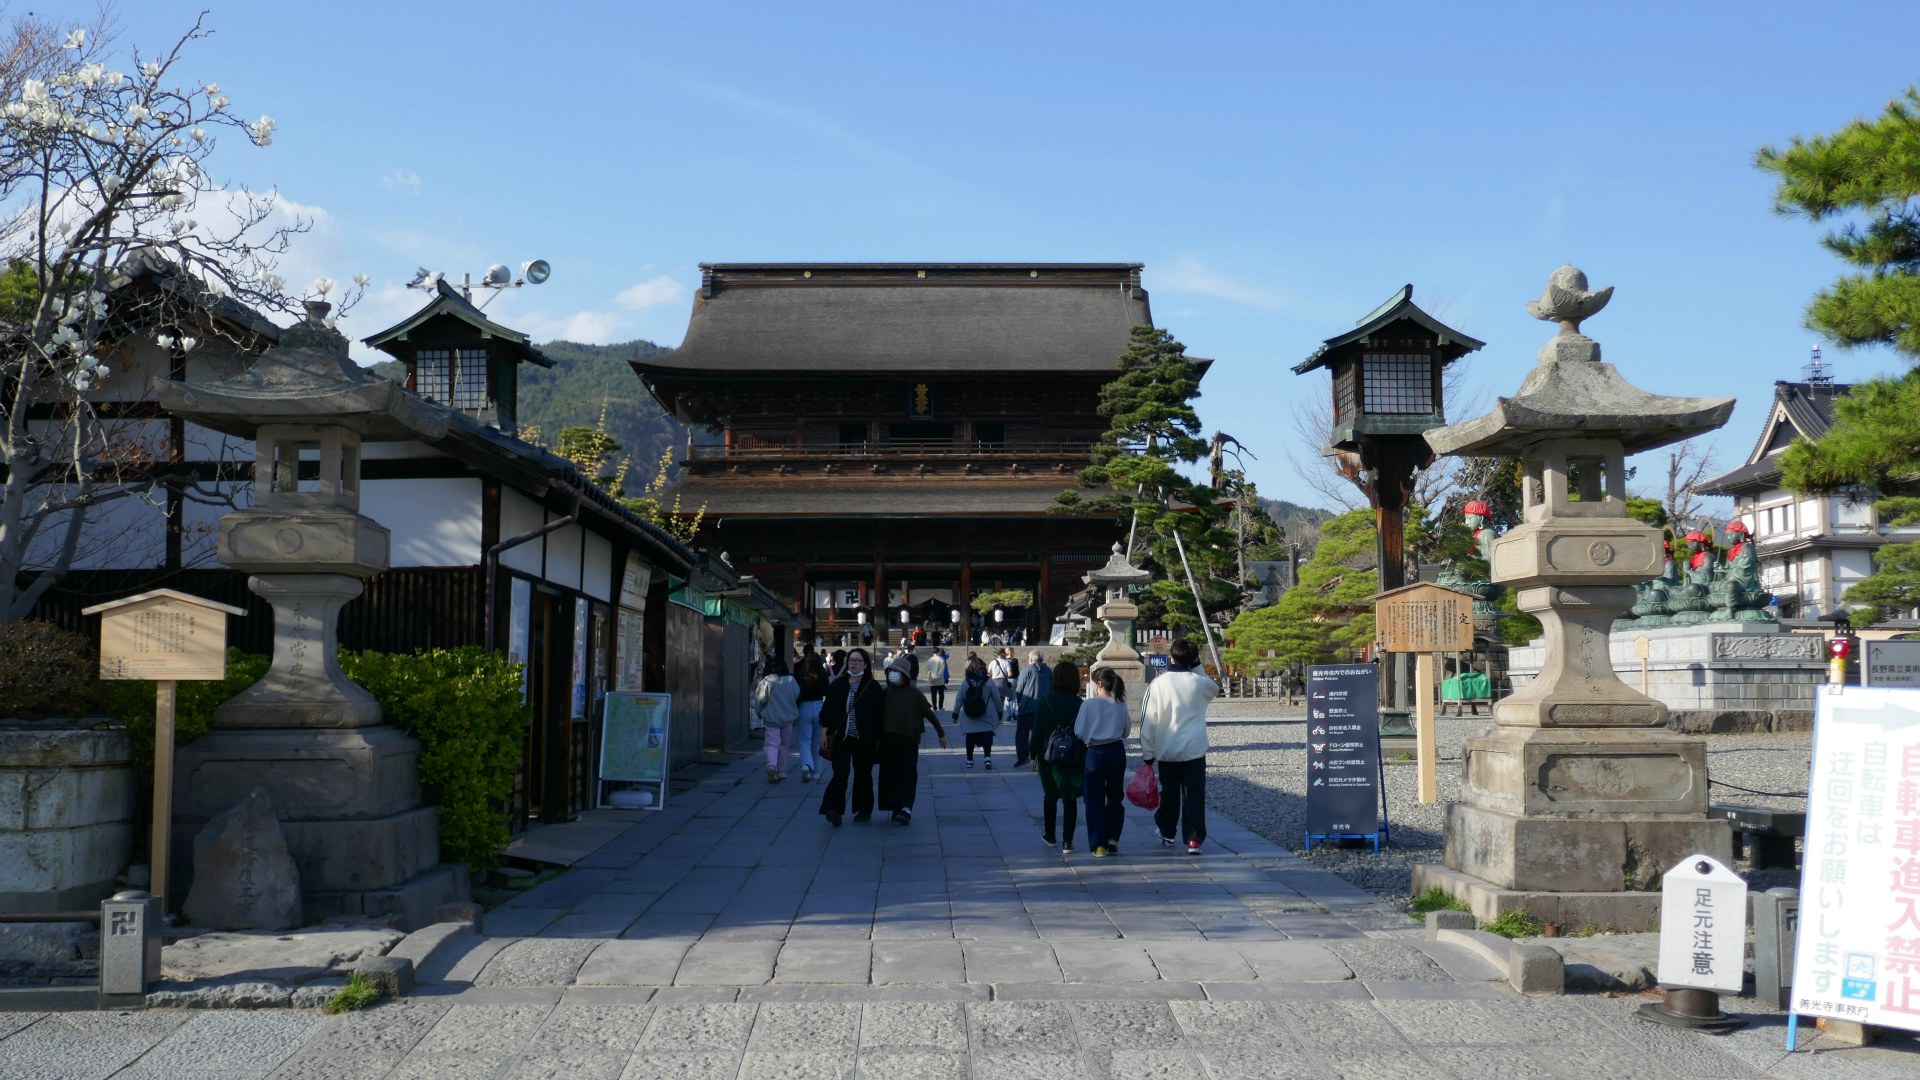 Sanmon Gate, Zenkoji Temple, Nagano